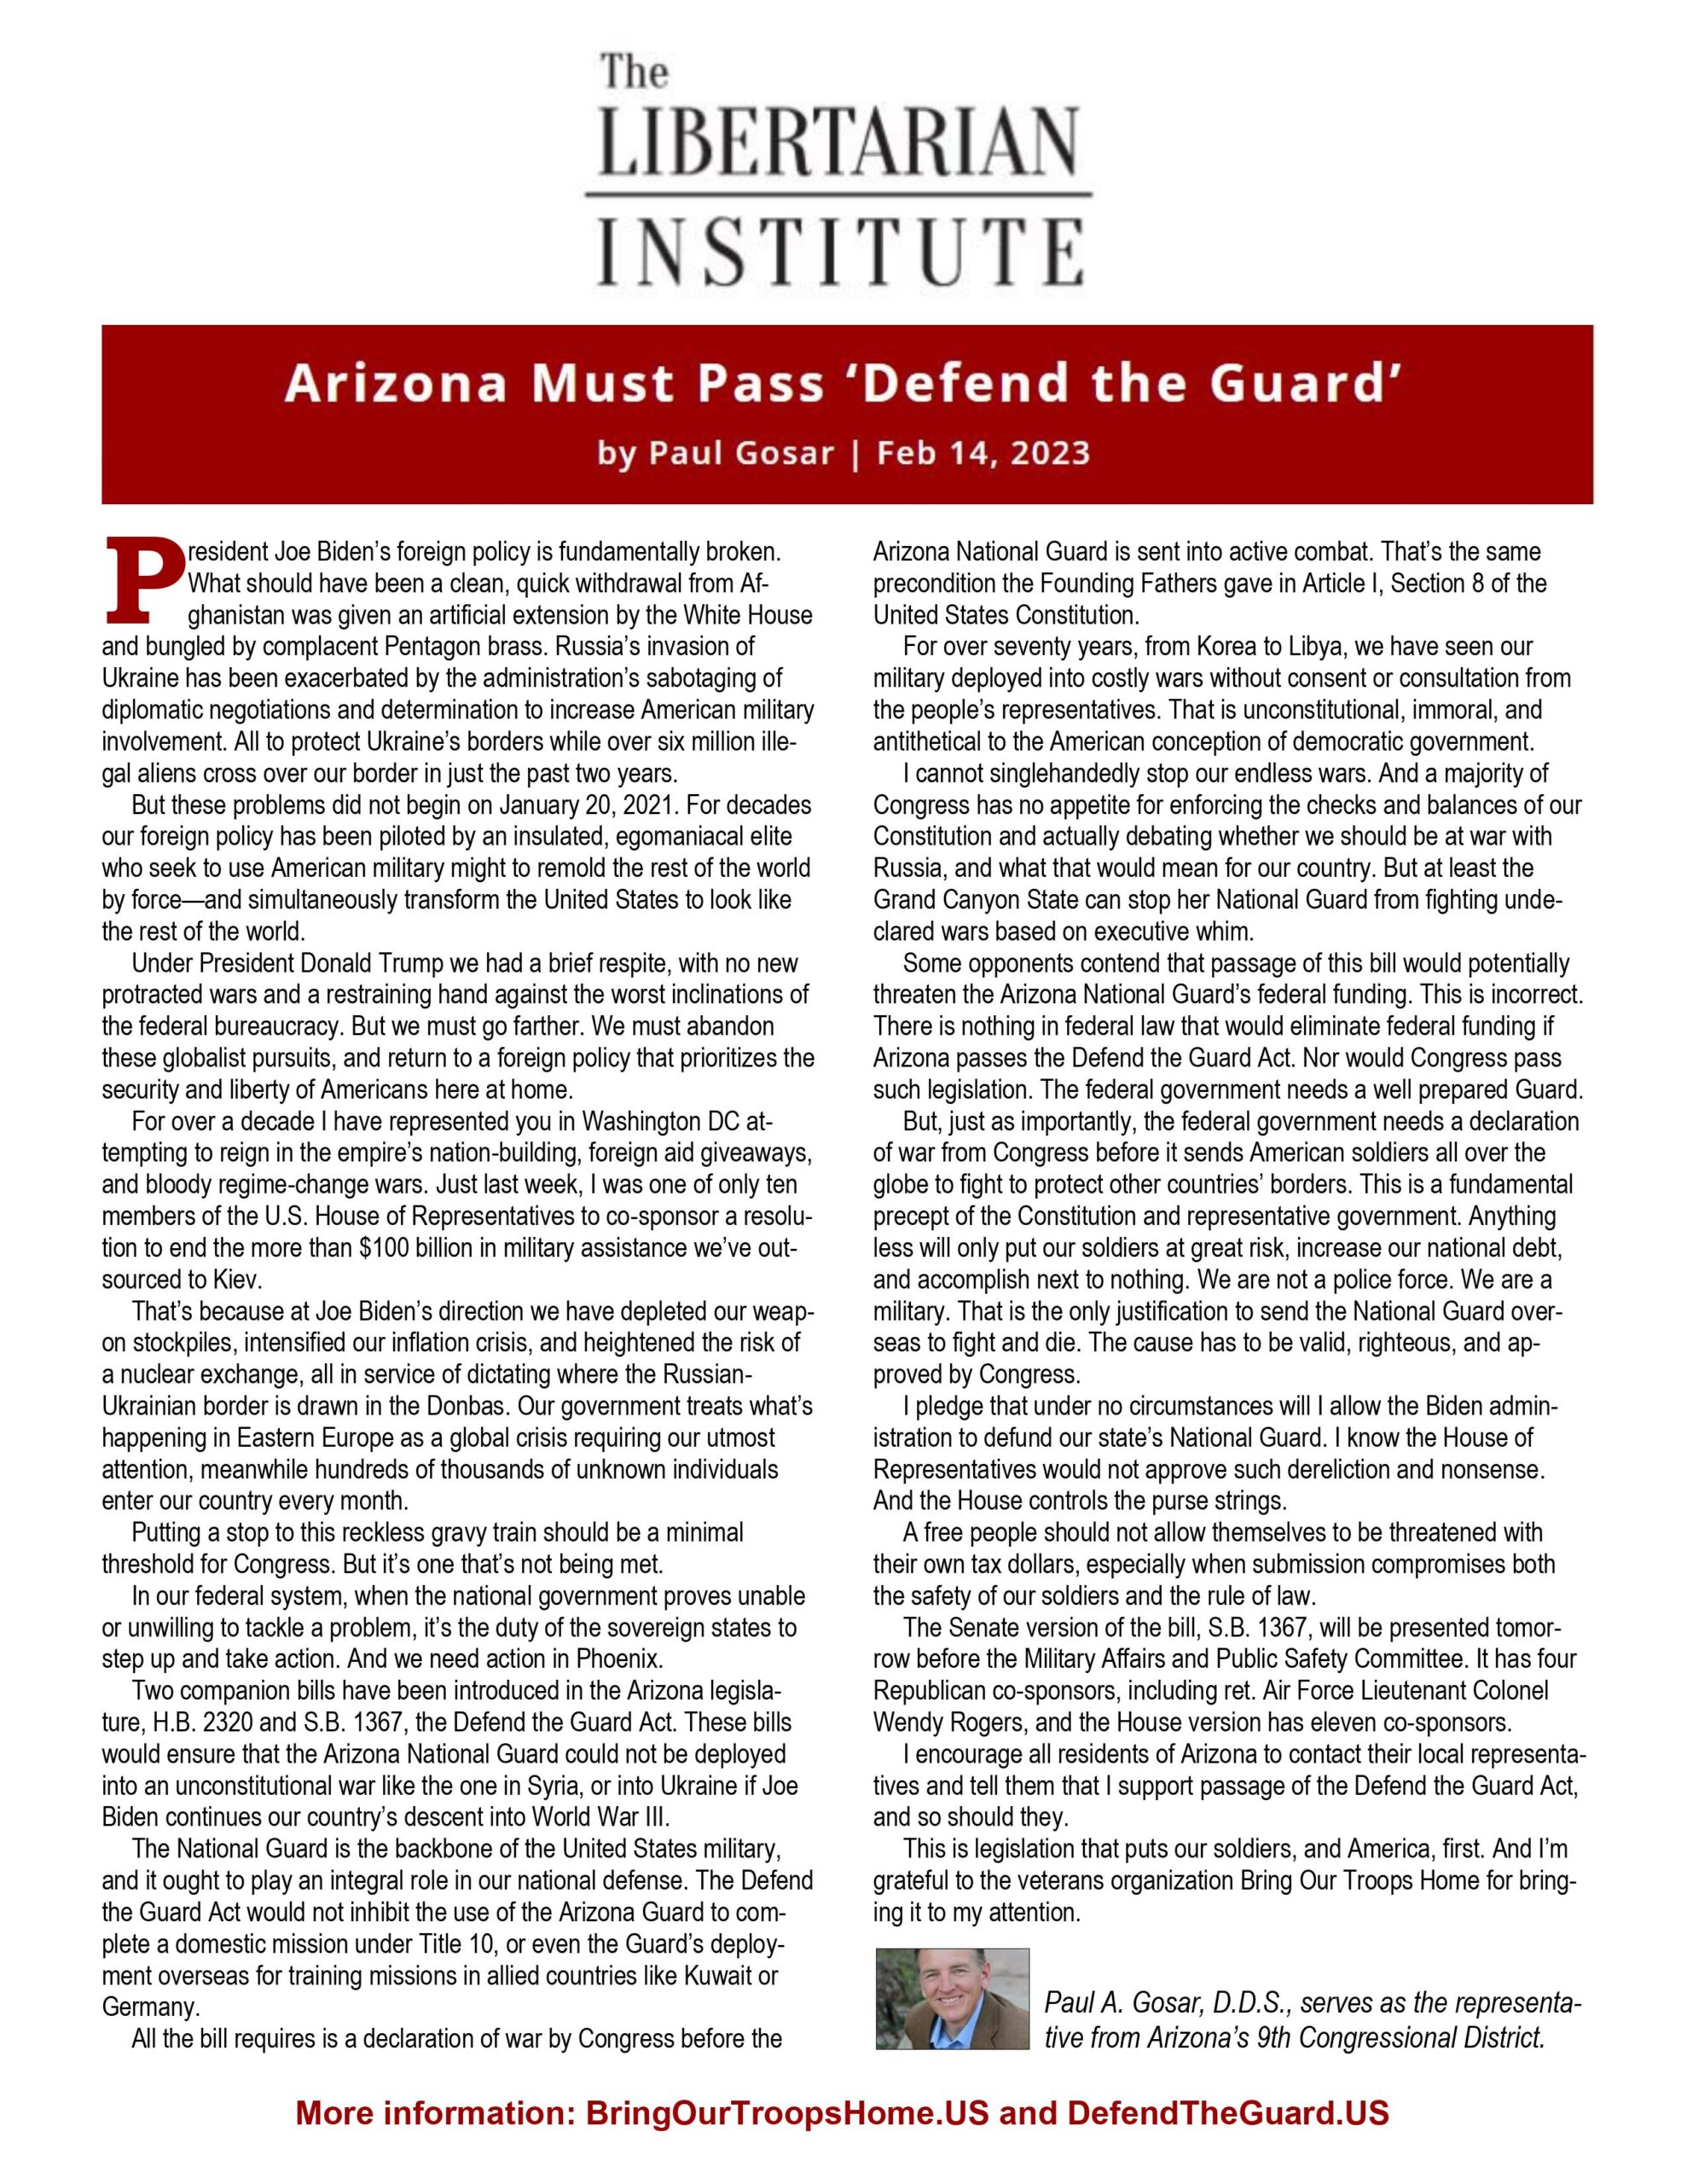 Arizona Must Pass ‘Defend the Guard’